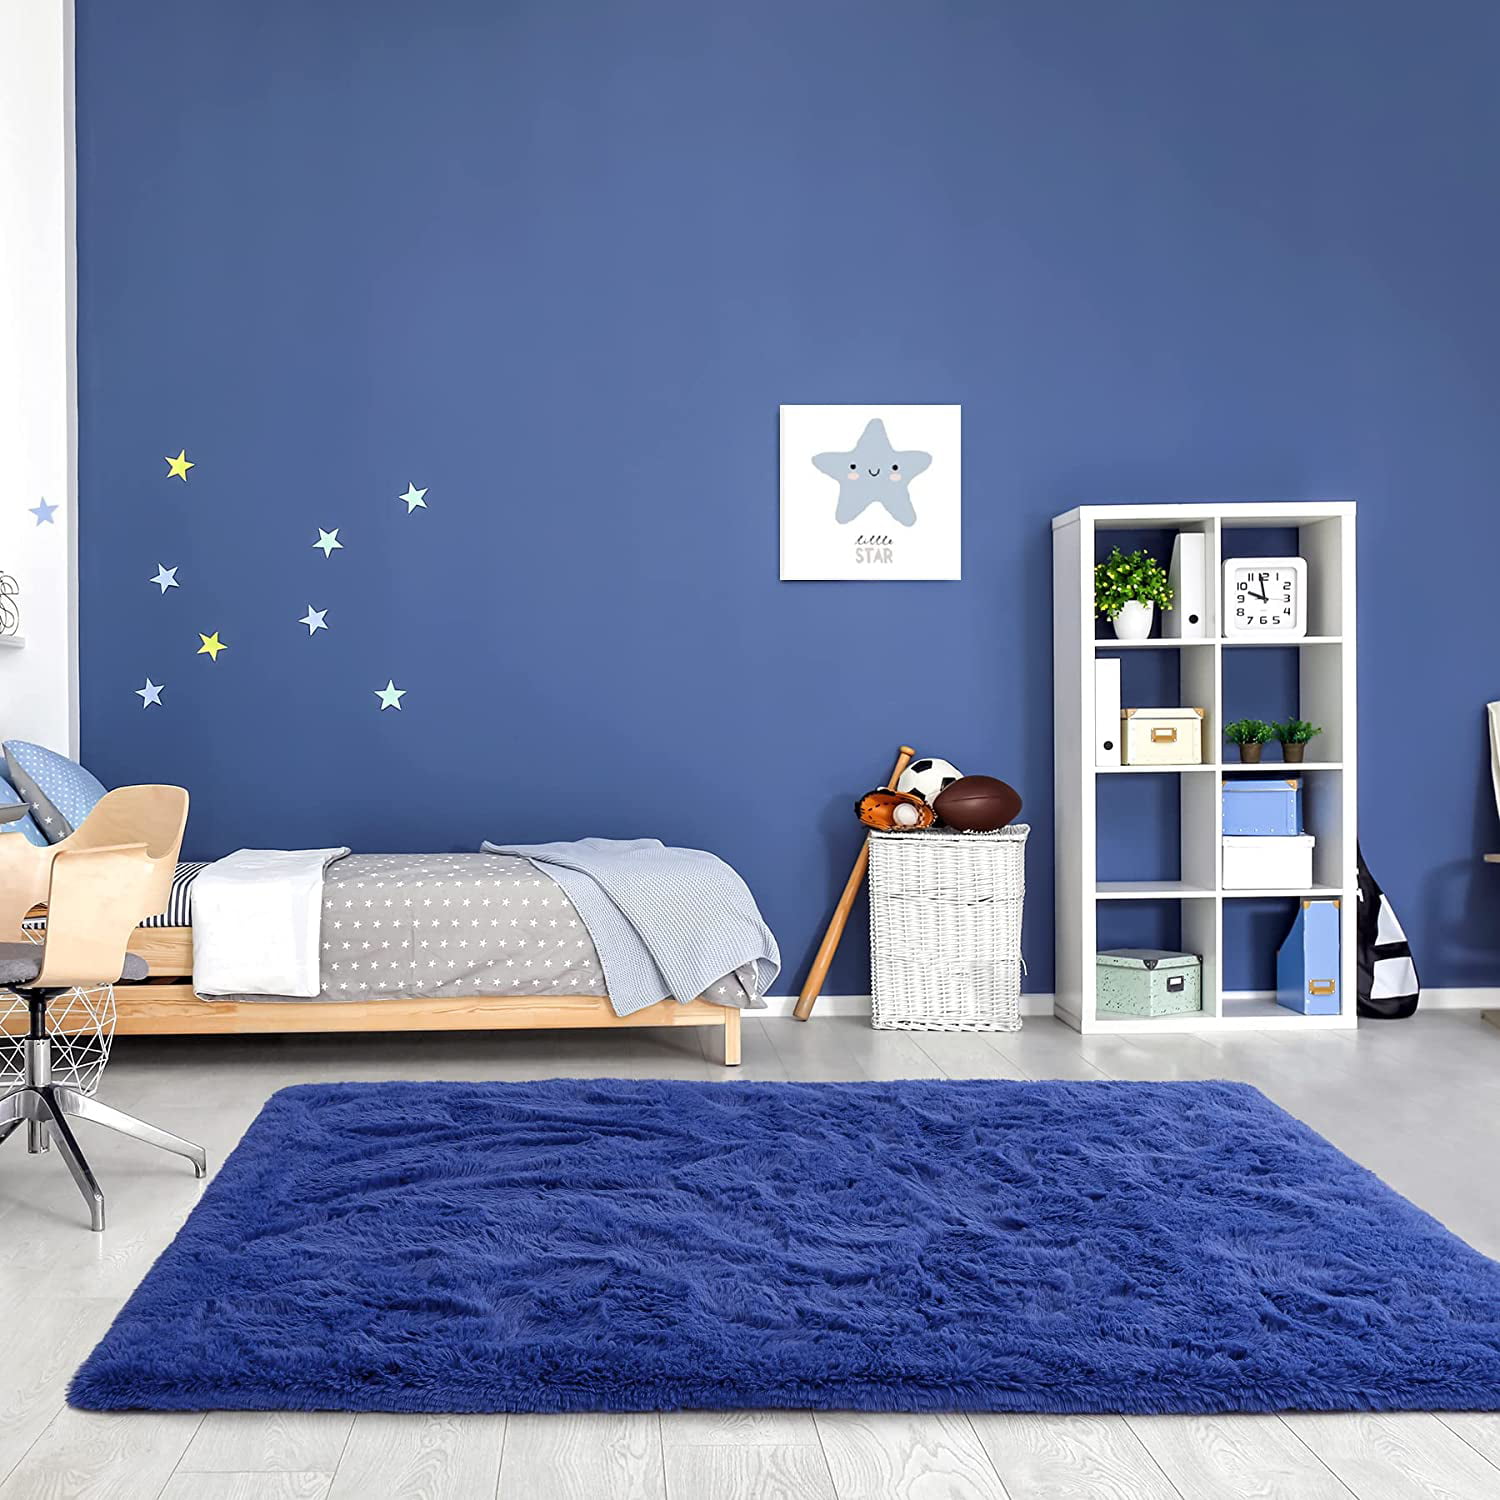 TWINNIS Luxury Fluffy Rugs Ultra Soft Shag Rug Carpet for Bedroom Living Room,Kids Room, Nursery,4x5.3 Feet,Indigo - image 5 of 8